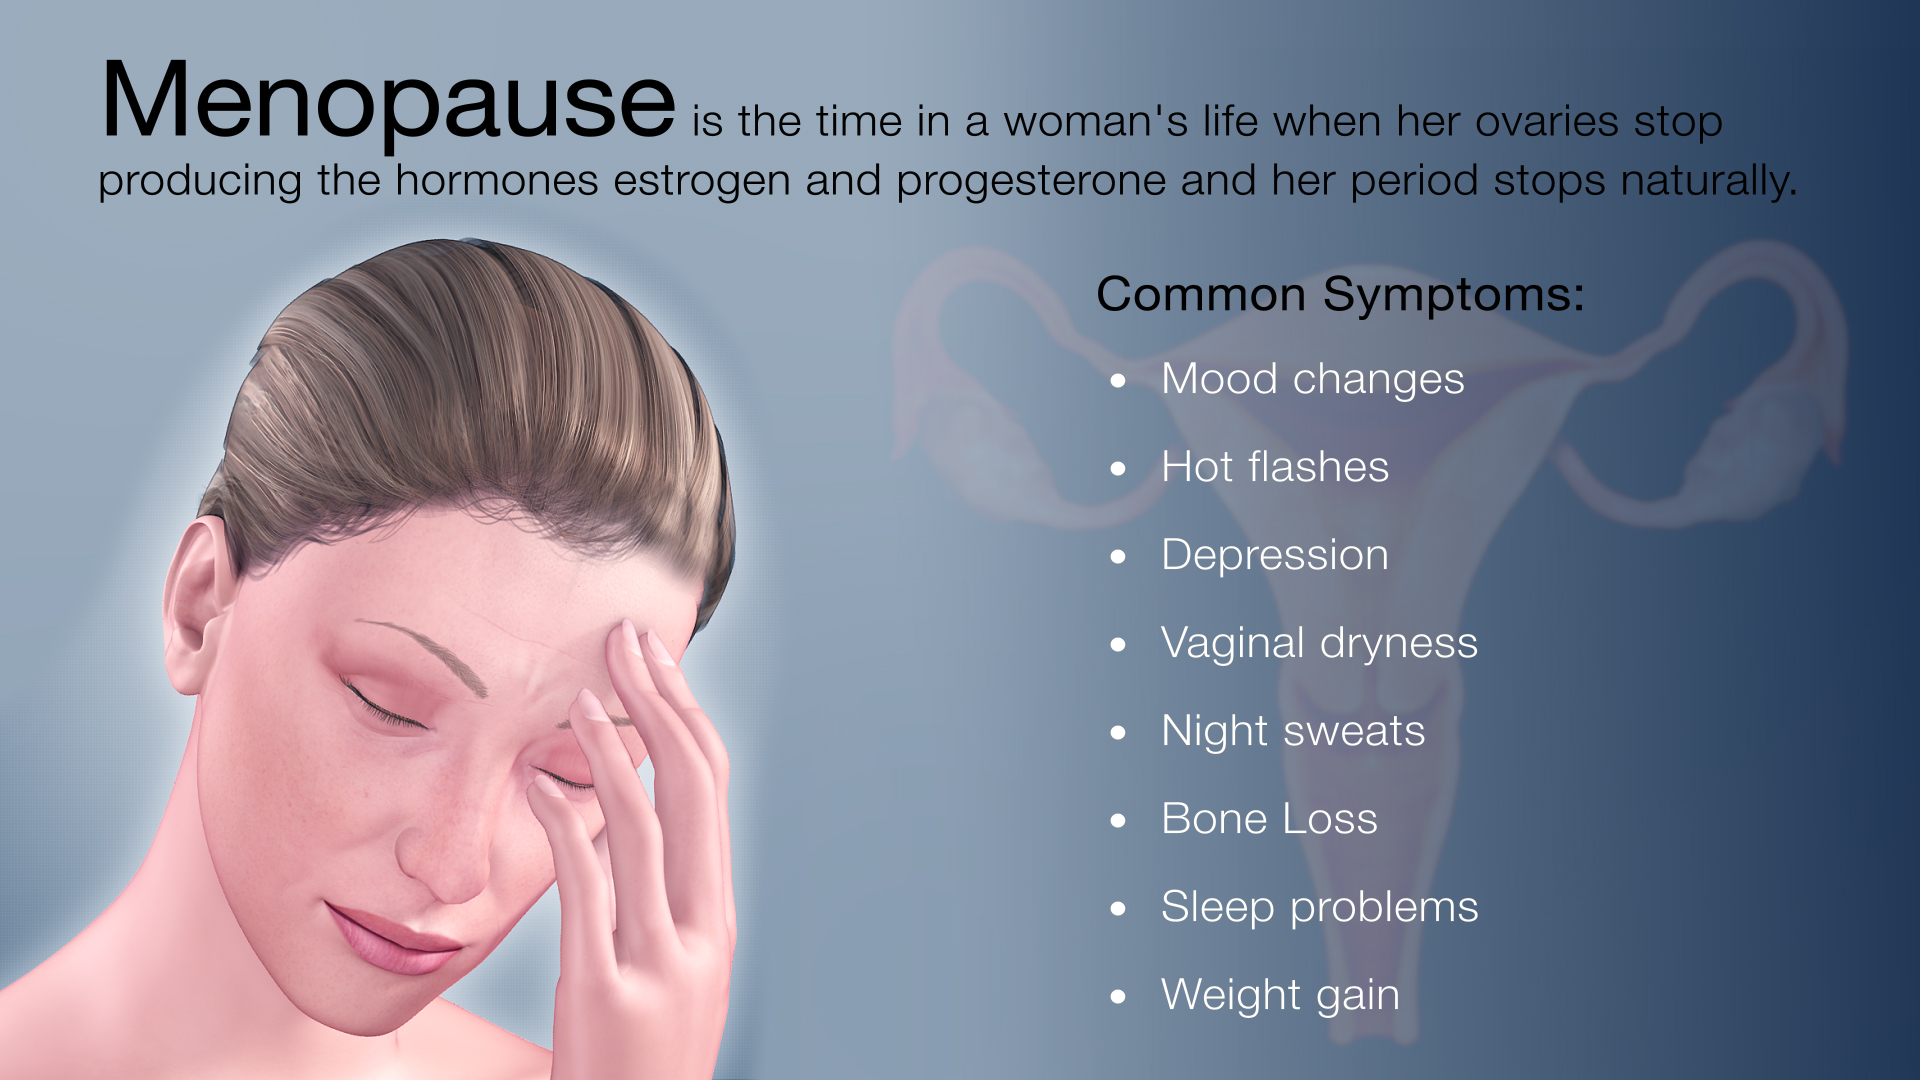 Menopause symptoms animation causes medical still treatment shot